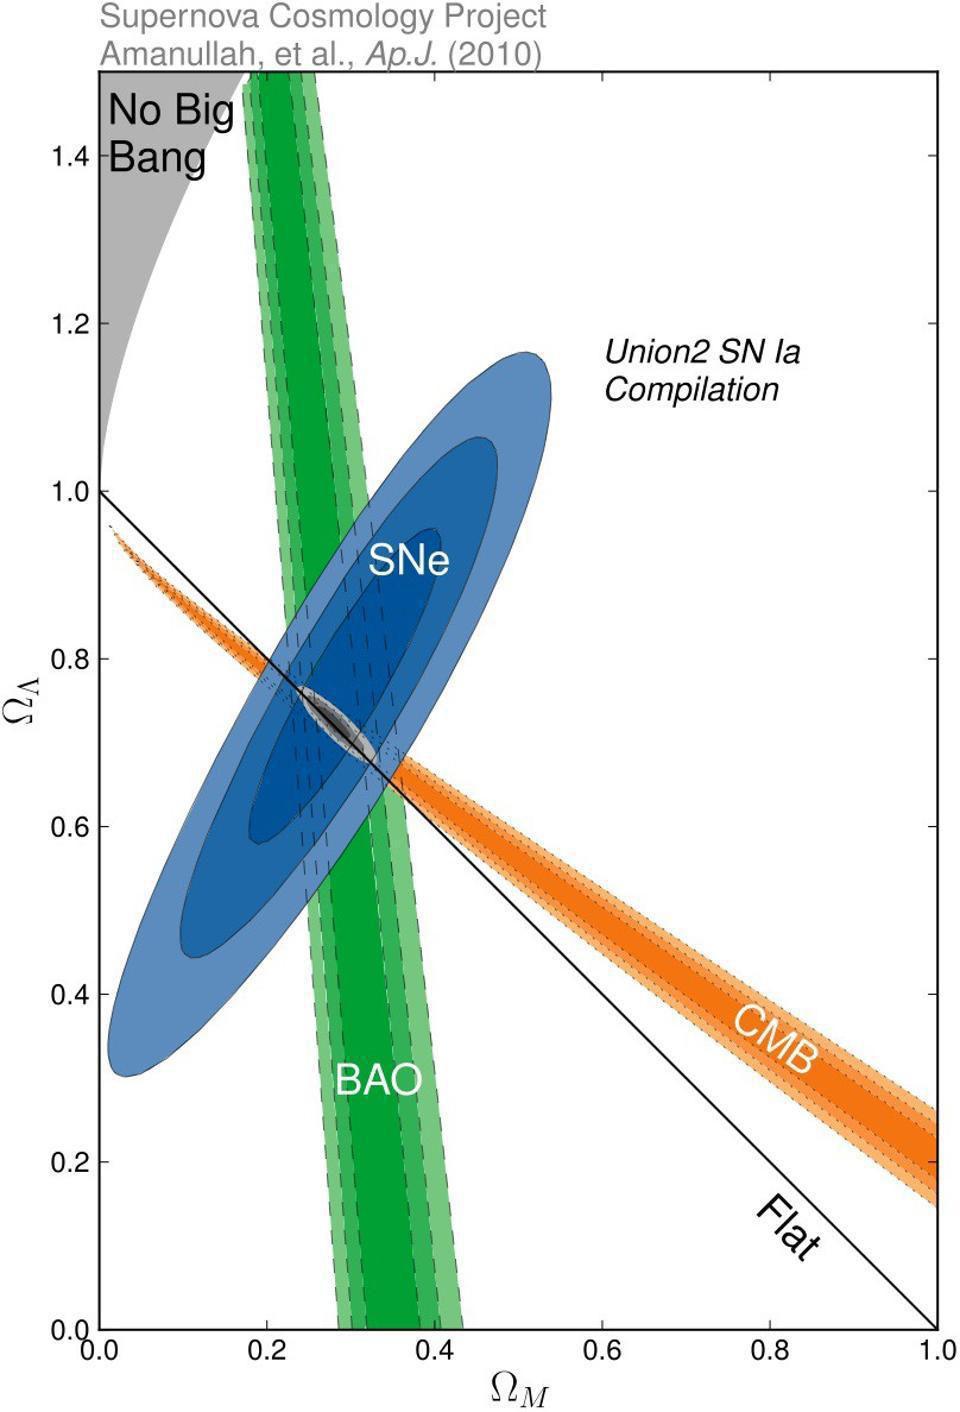 constraints dark energy omega matter lambda